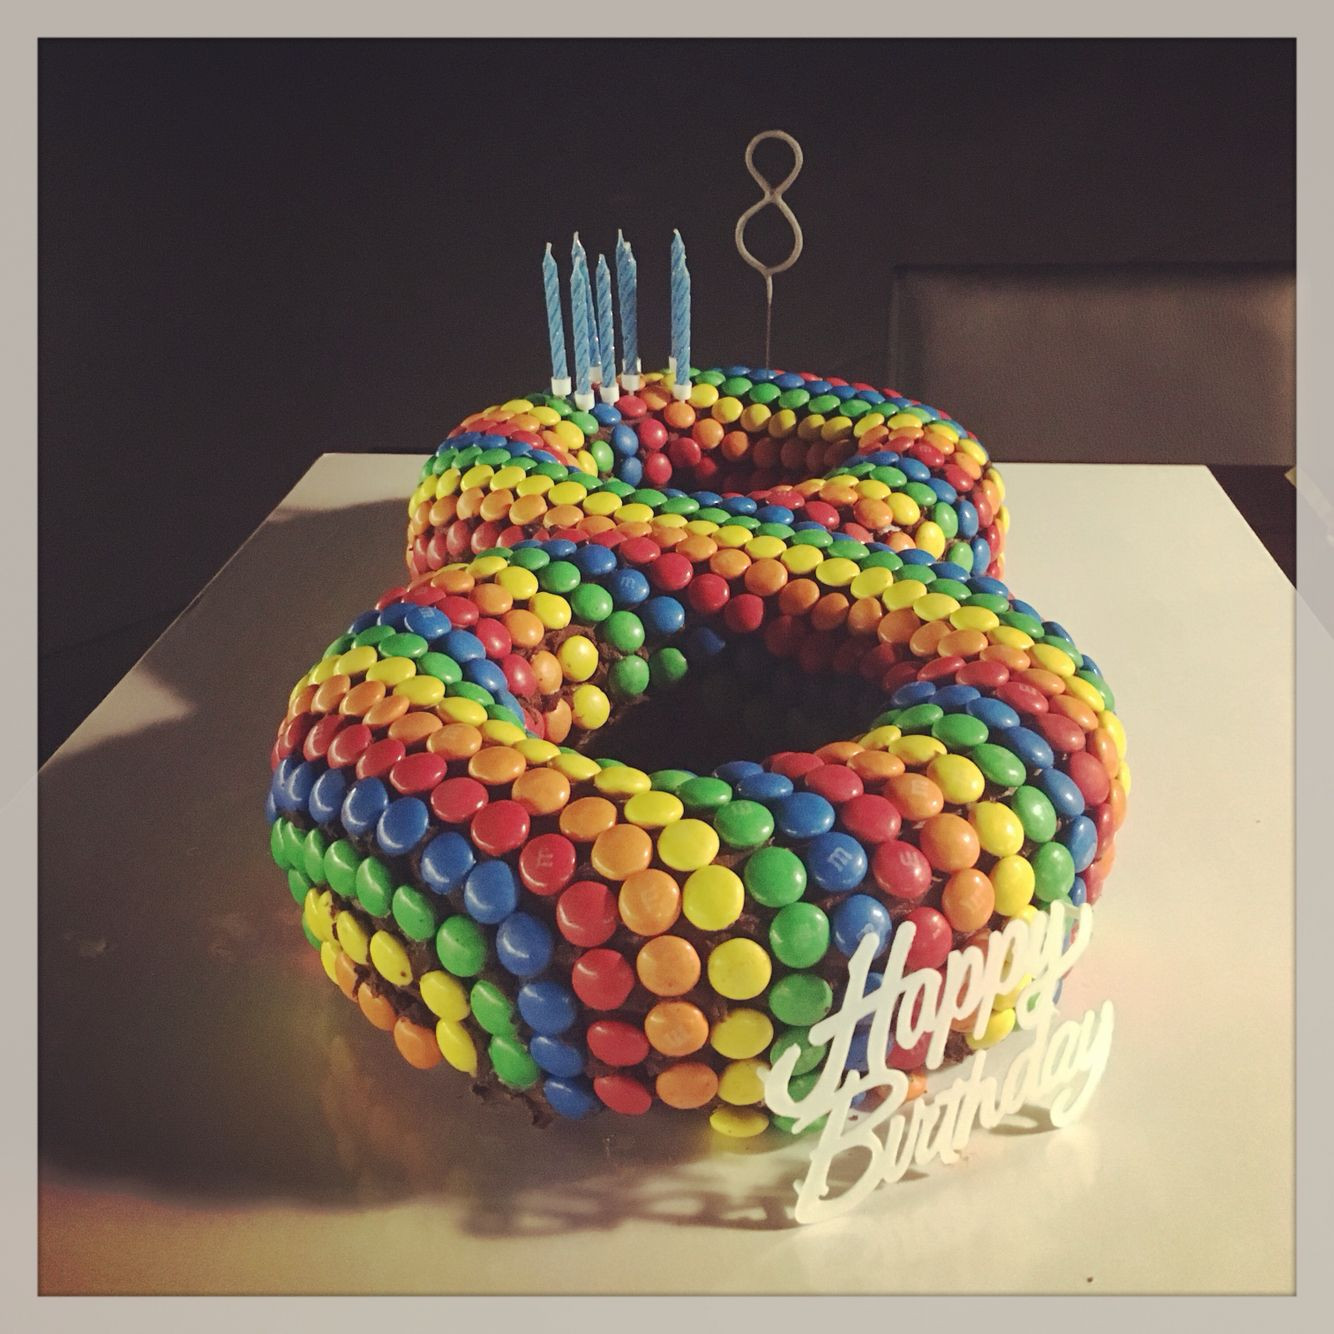 8 Year Old Boy Birthday Party Ideas
 Rainbow M&M s birthday cake 8 years old